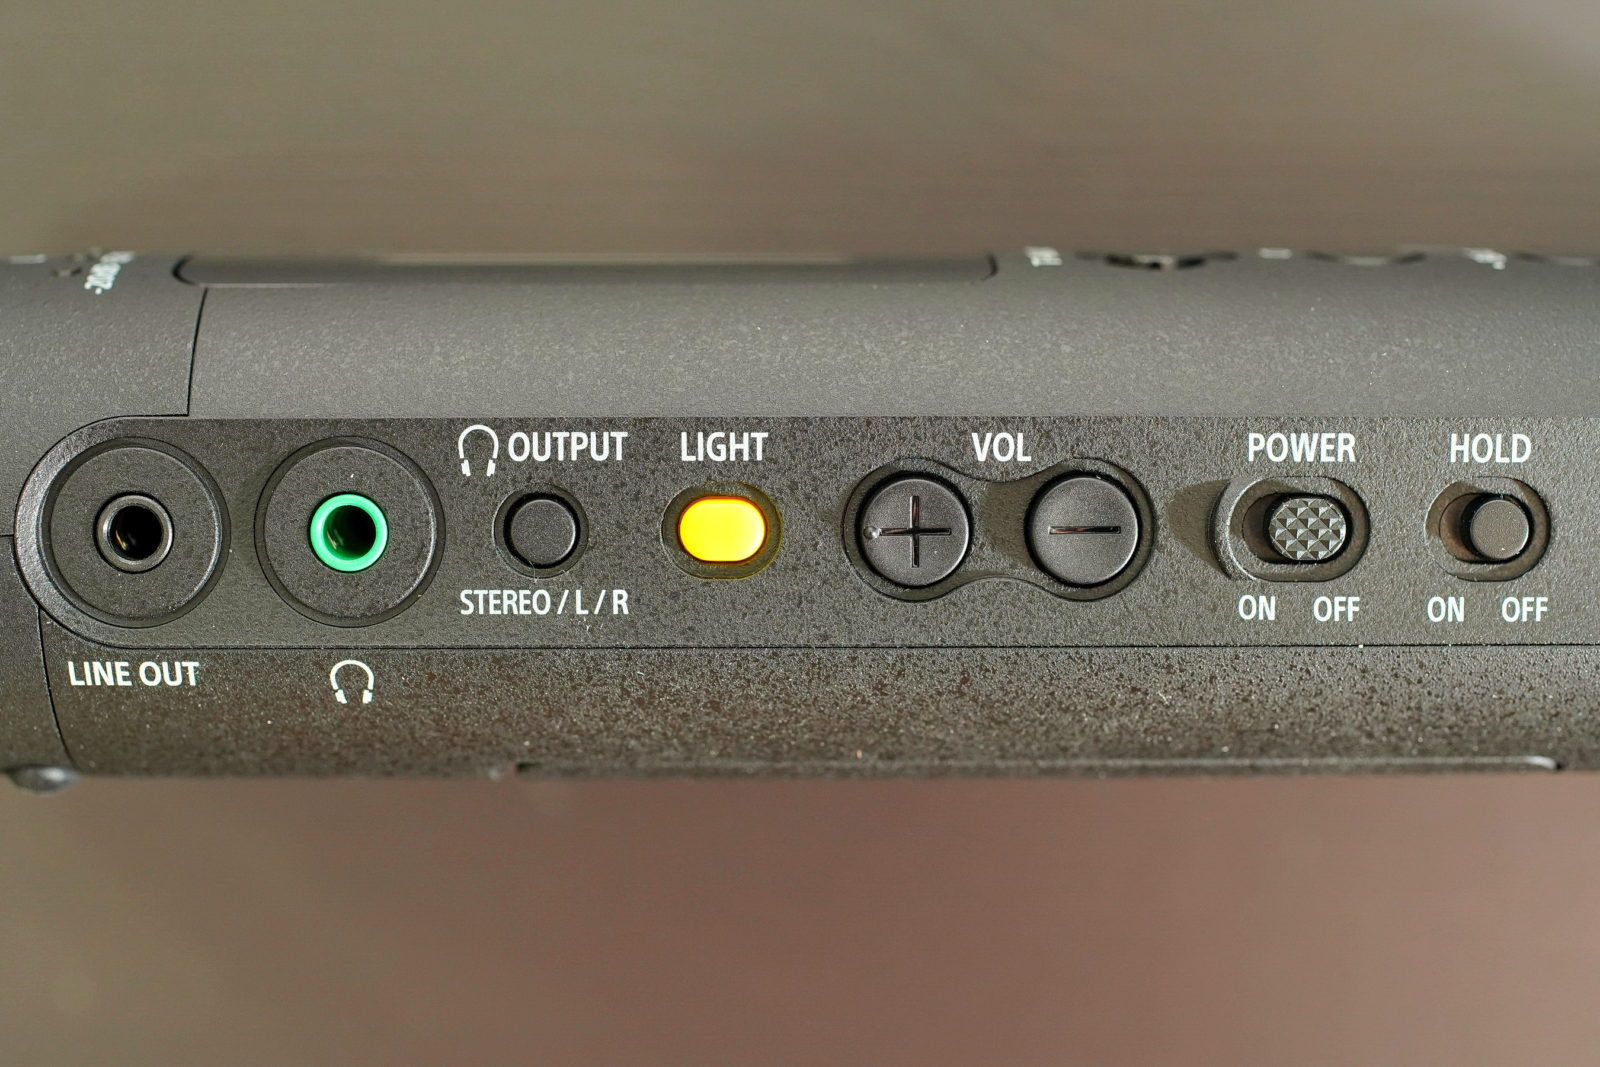 PCM-D10 Audio Recorder with two XLR Receptacle Connectors